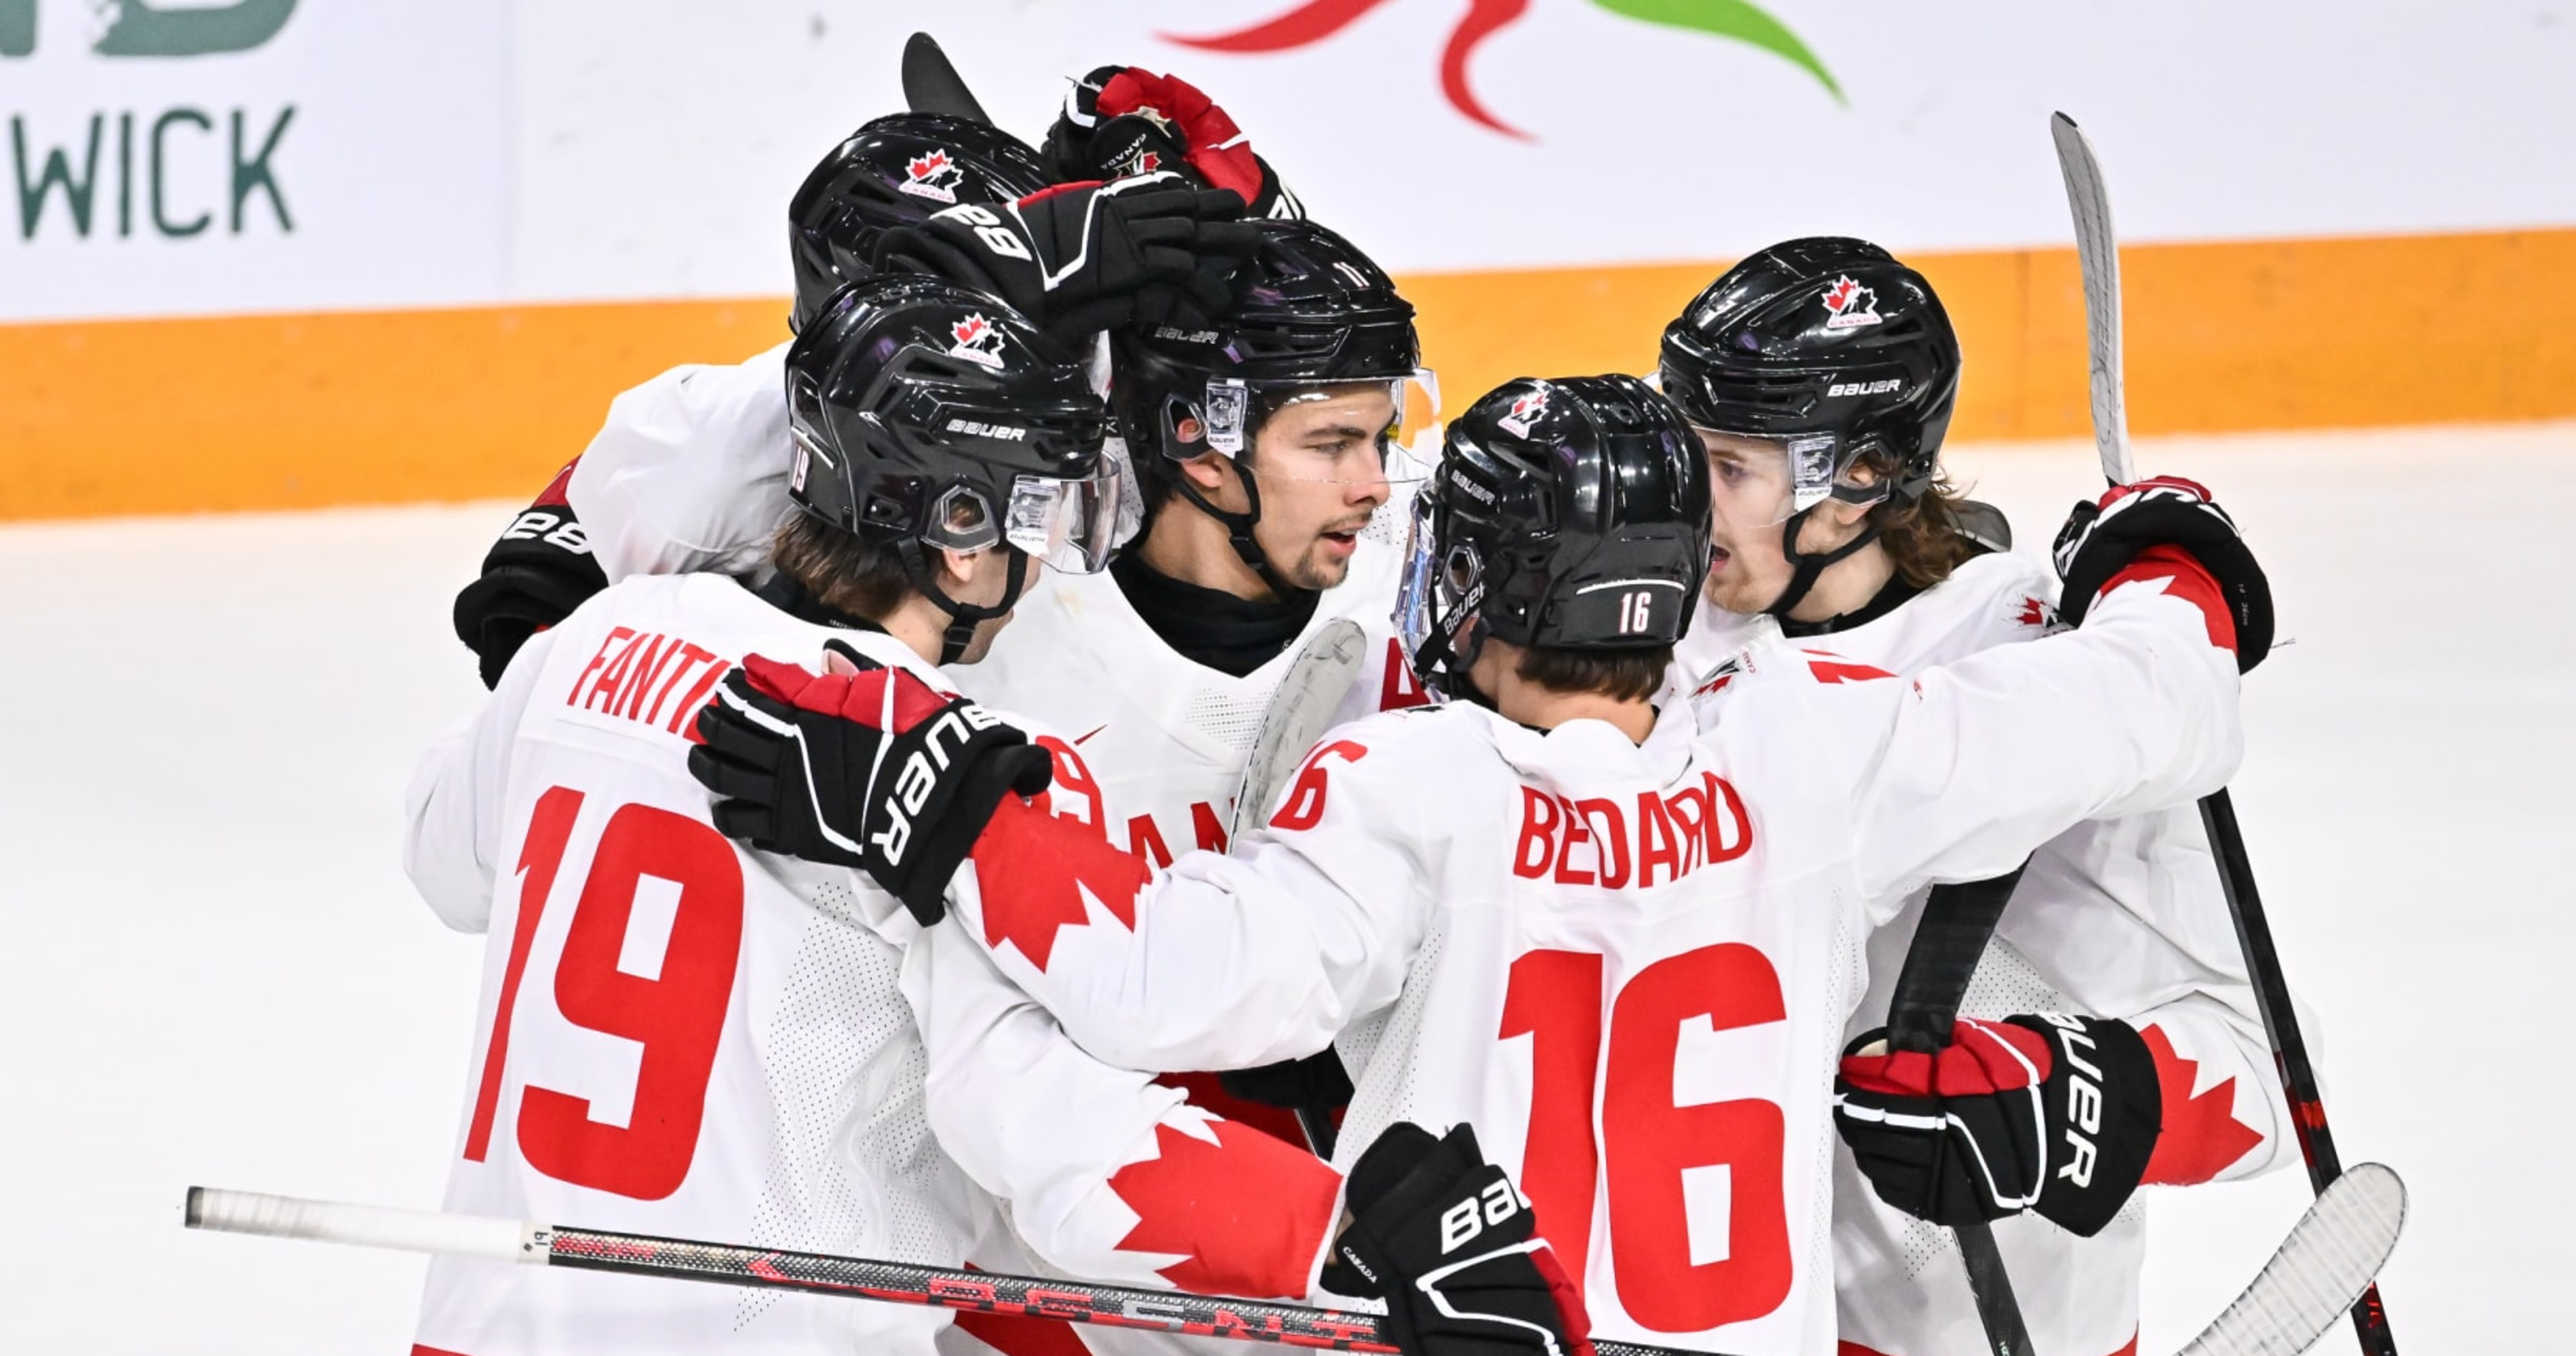 Connor McDavid hopes to represent Team Canada again in the future